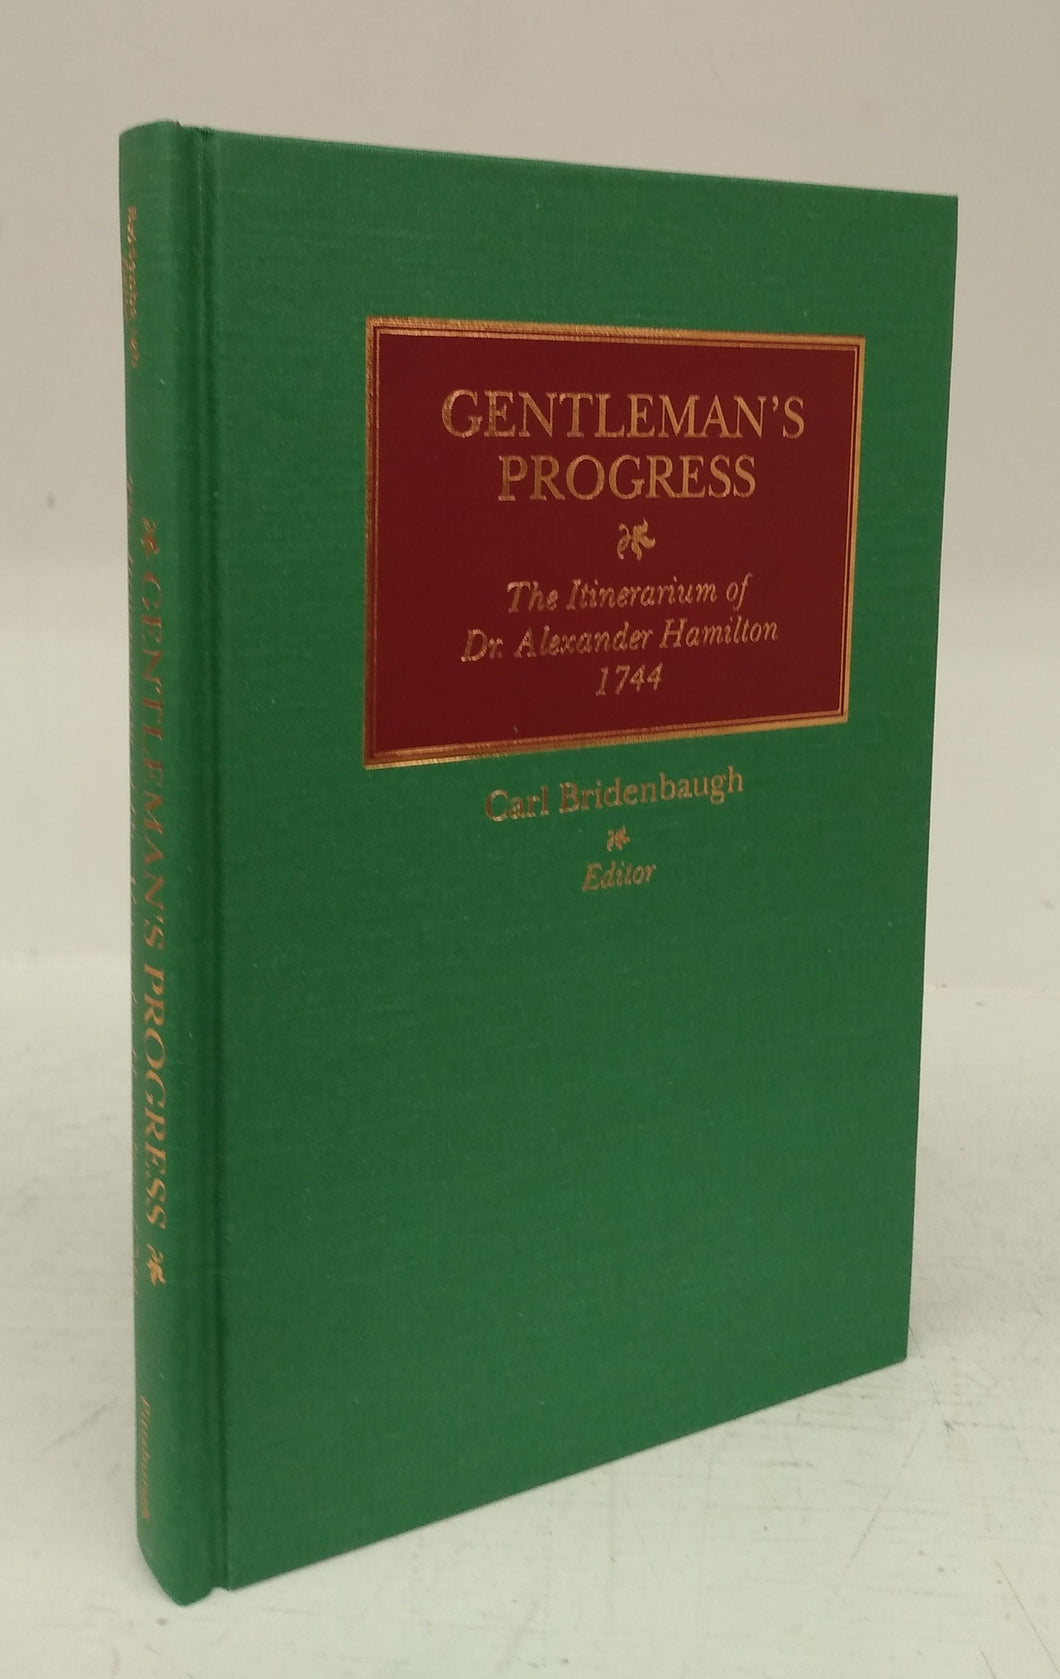 Gentleman's Progress: The Intinerarium of Dr. Alexander Hamilton 1744